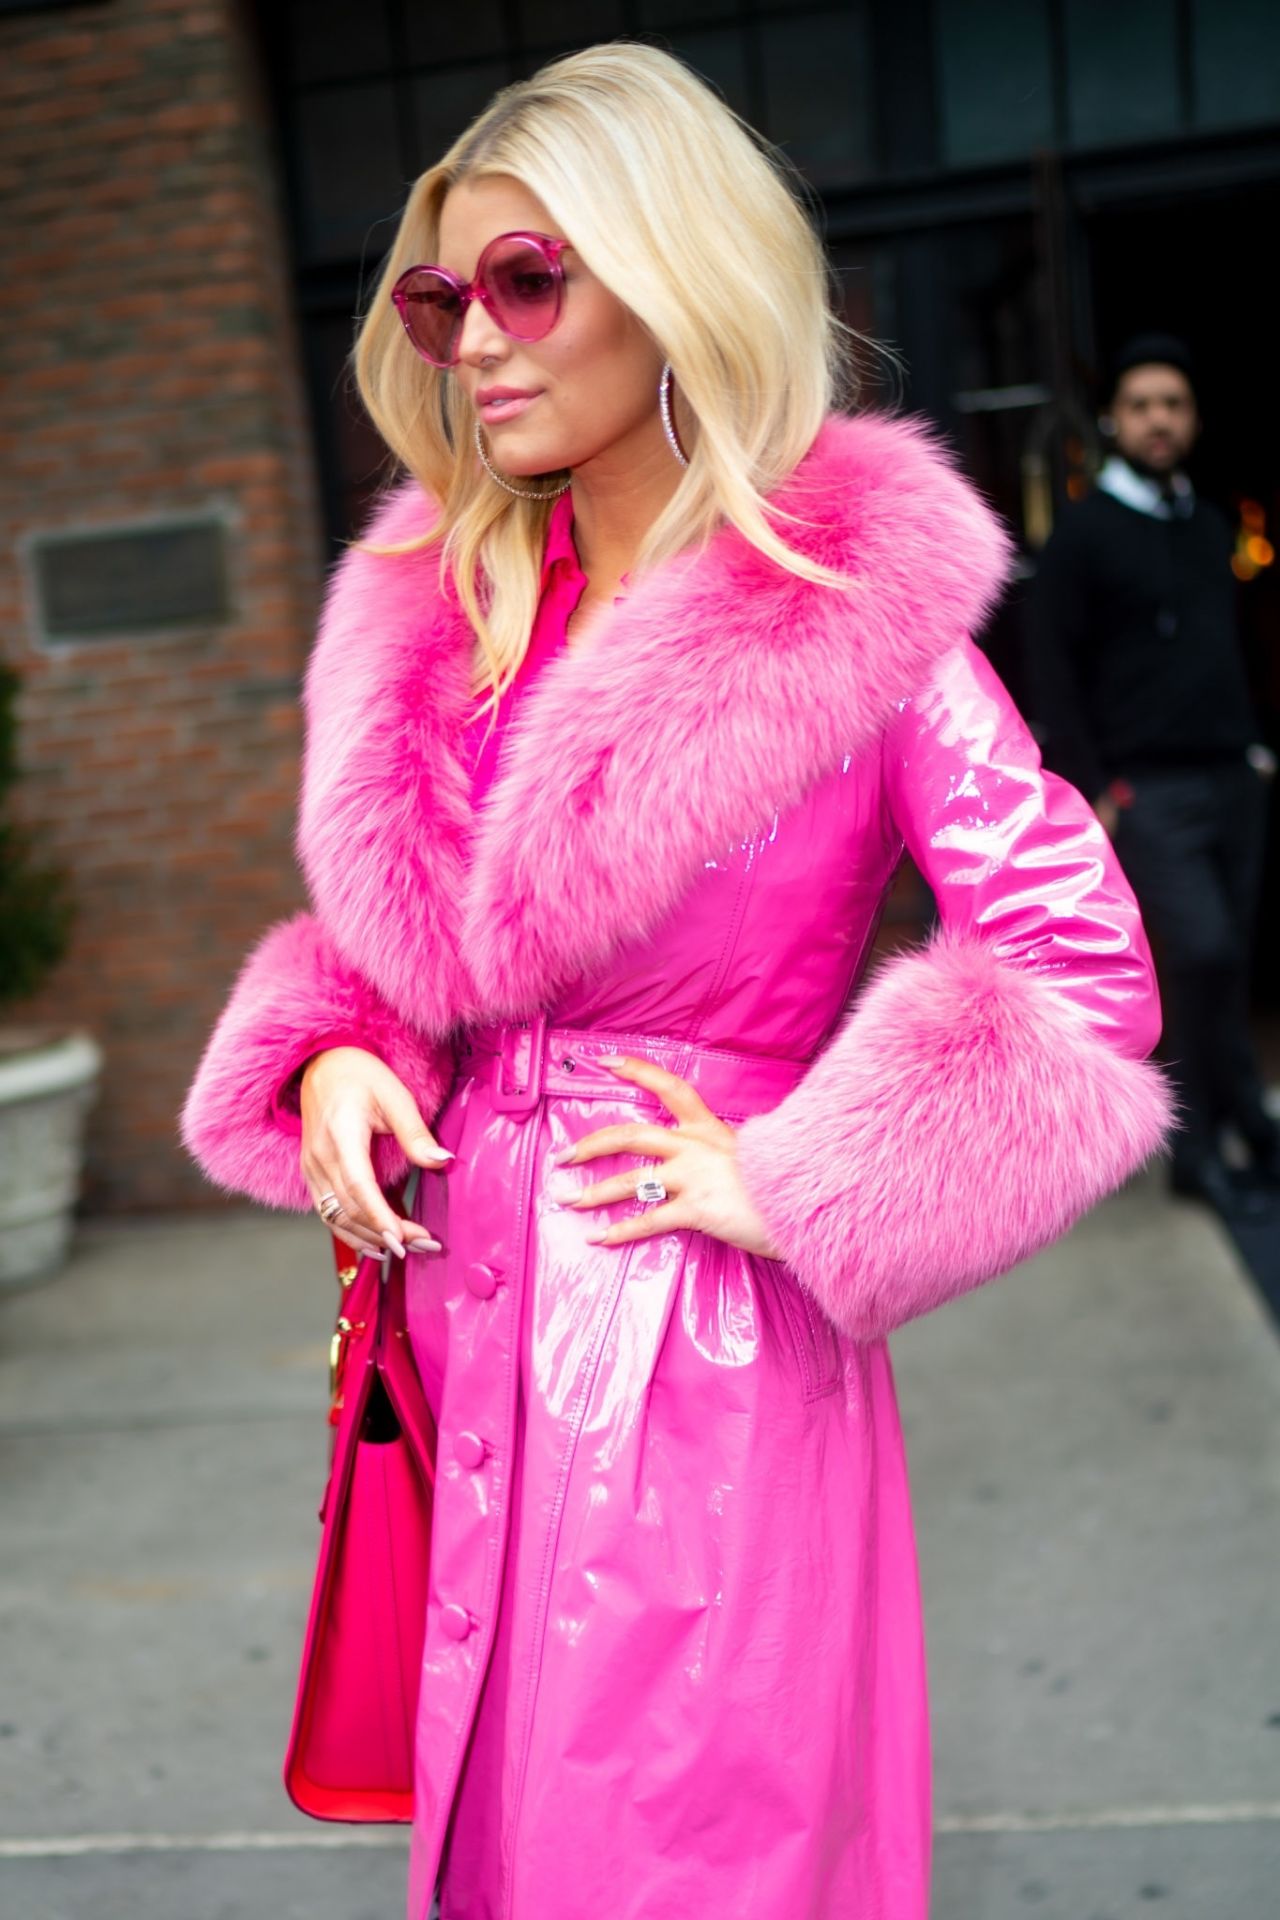 Jessica Simpson Wears Pink Jacket With Fur Trim: Channels Elle